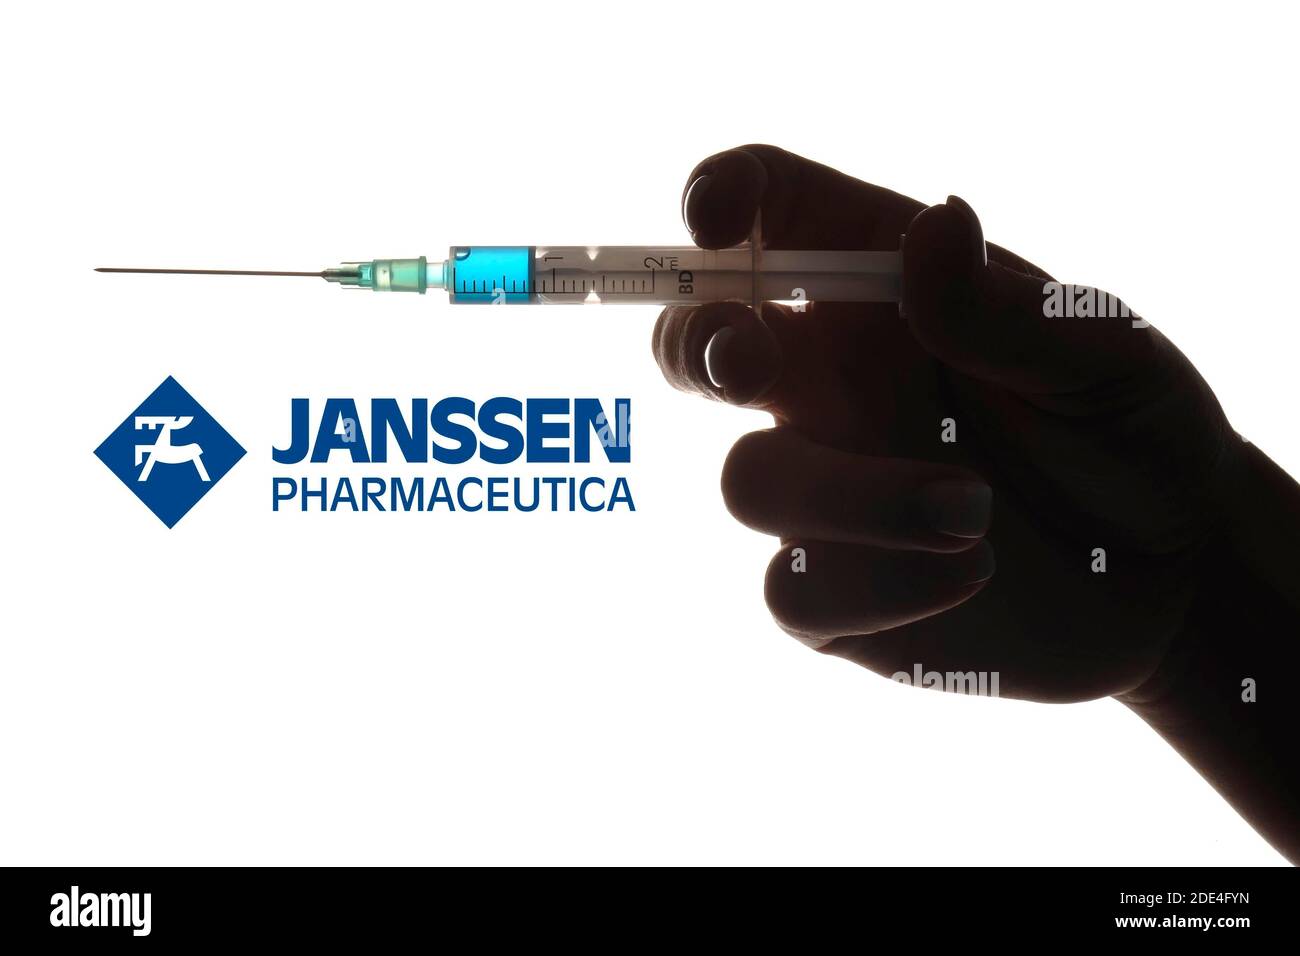 Image symbole vaccin Corona de JANSSEN PHARMACEUTICA, main avec seringue, crise corona, Bade-Wurtemberg, Allemagne Banque D'Images